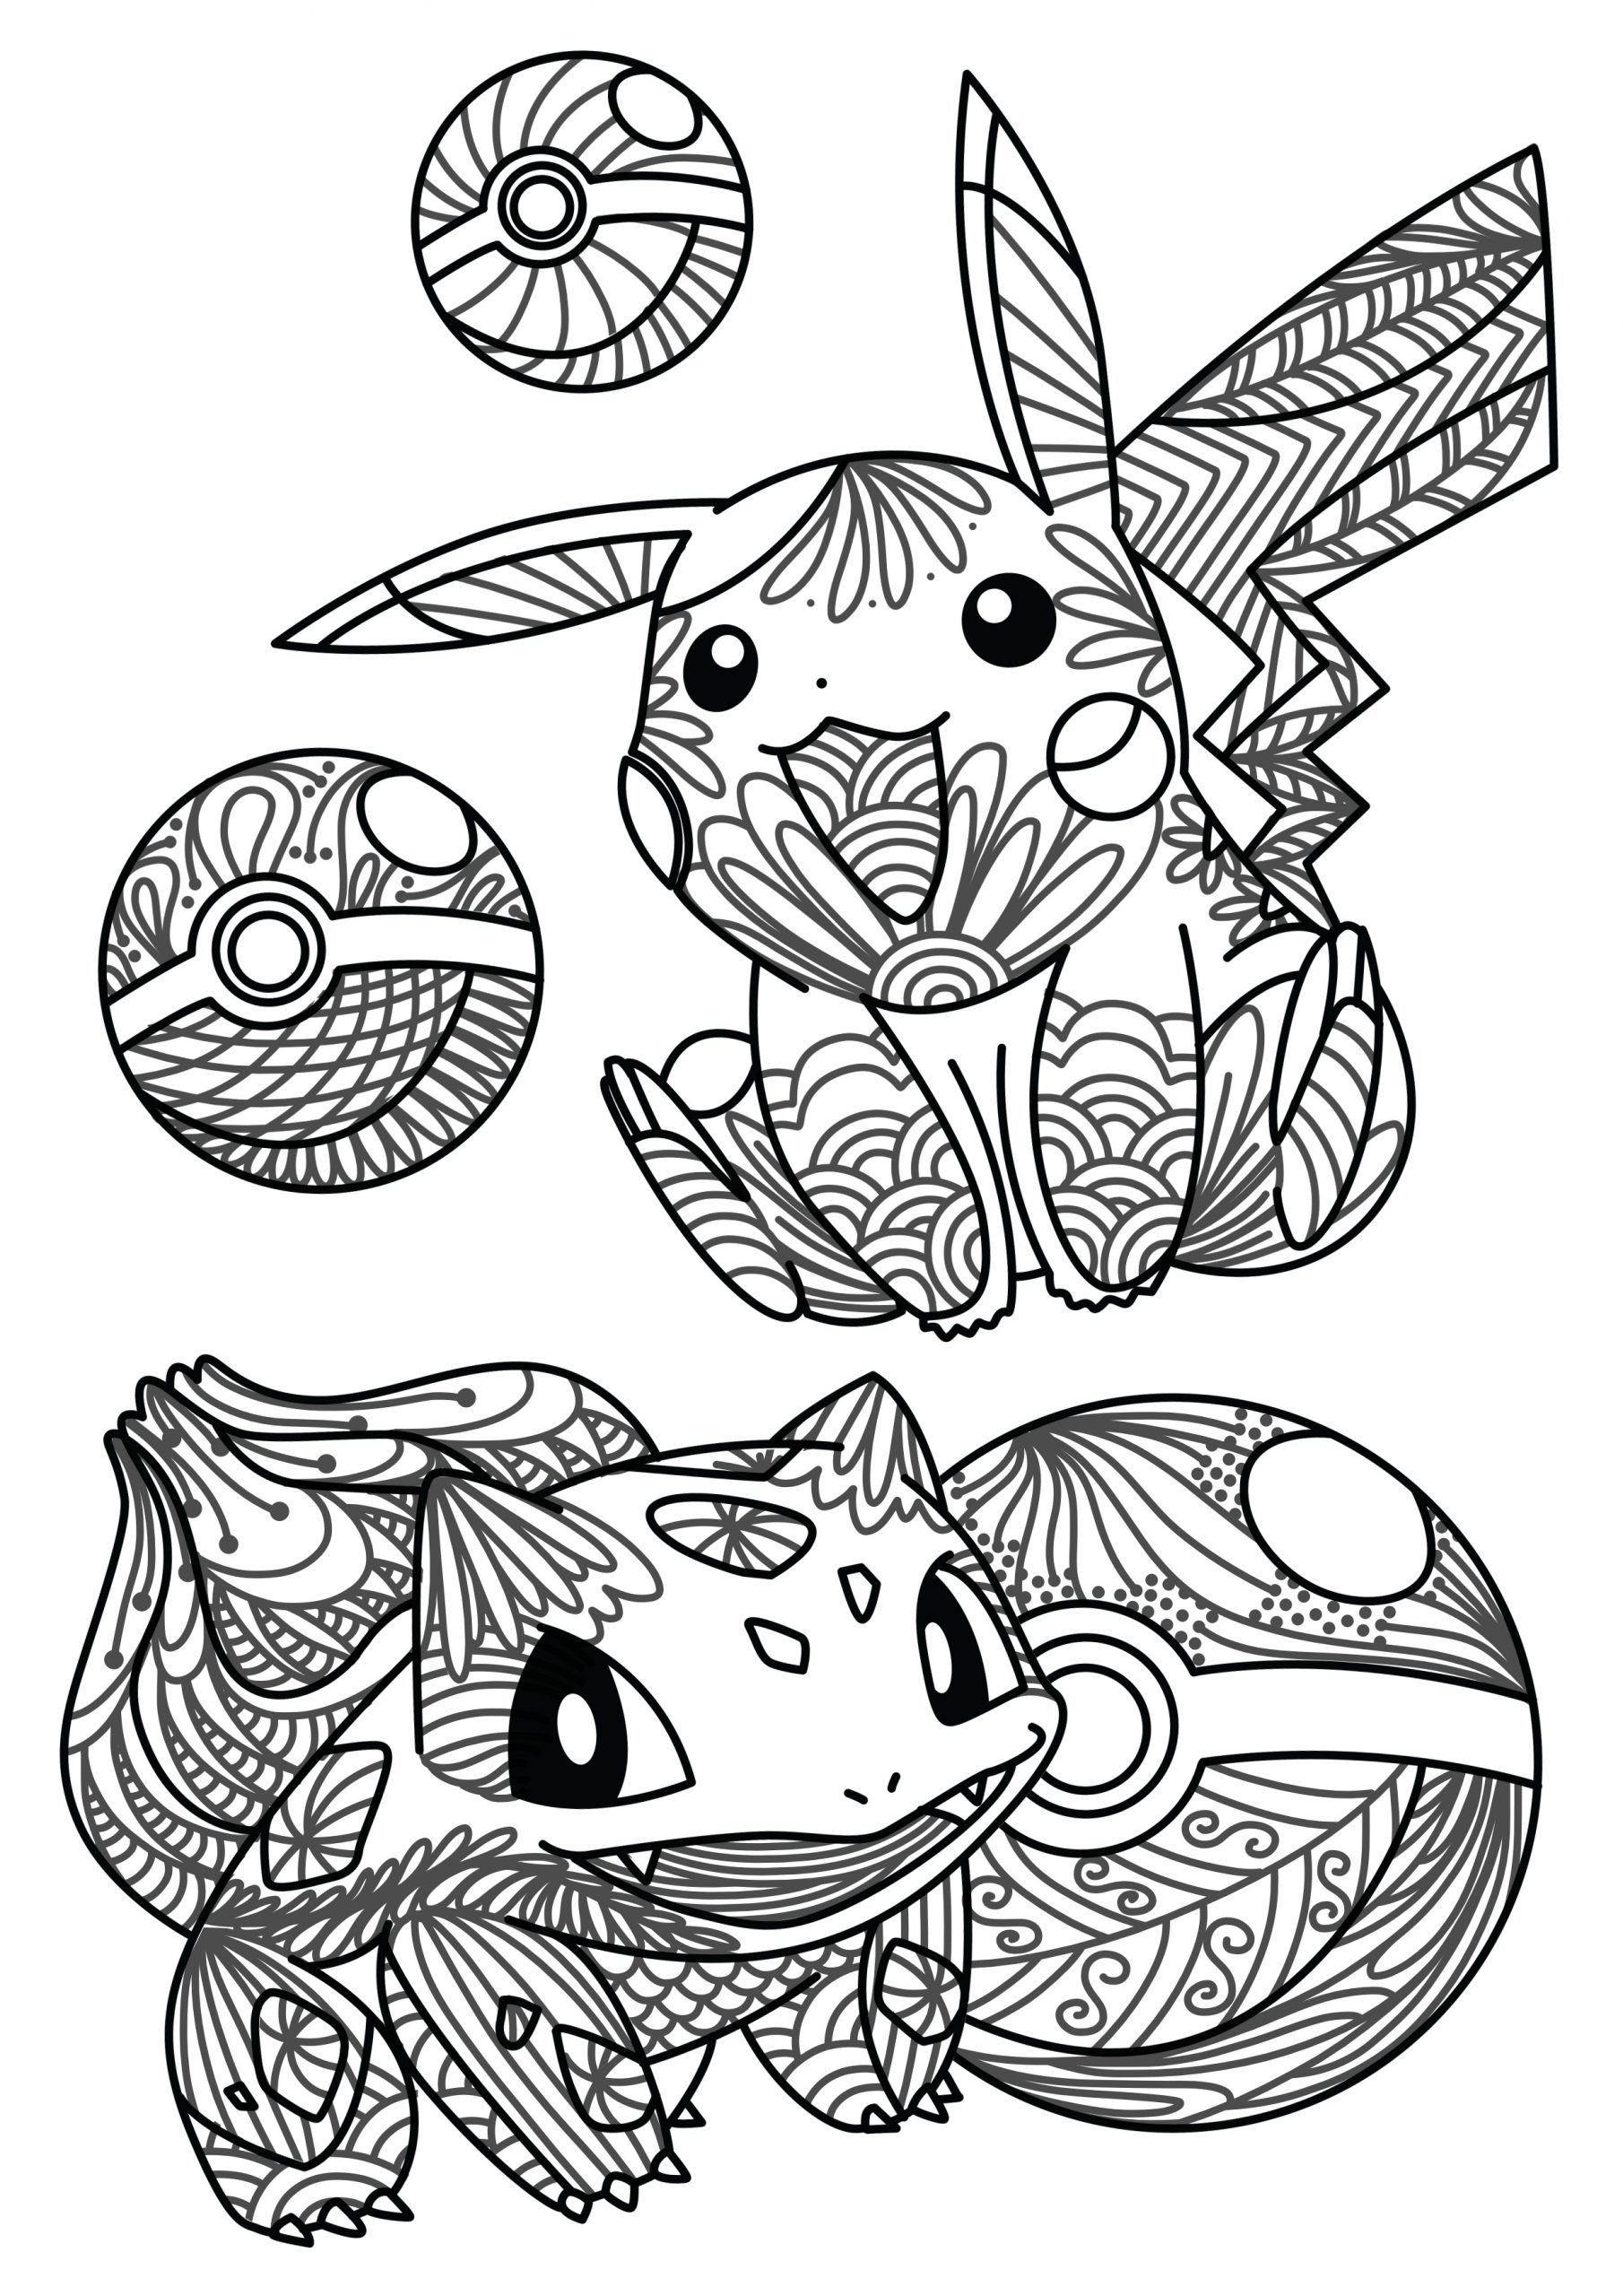 Dessin Mandala Pokemon Impressionnant Galerie You Caught It Free Pokemon Adult Coloring Sheet – Craft